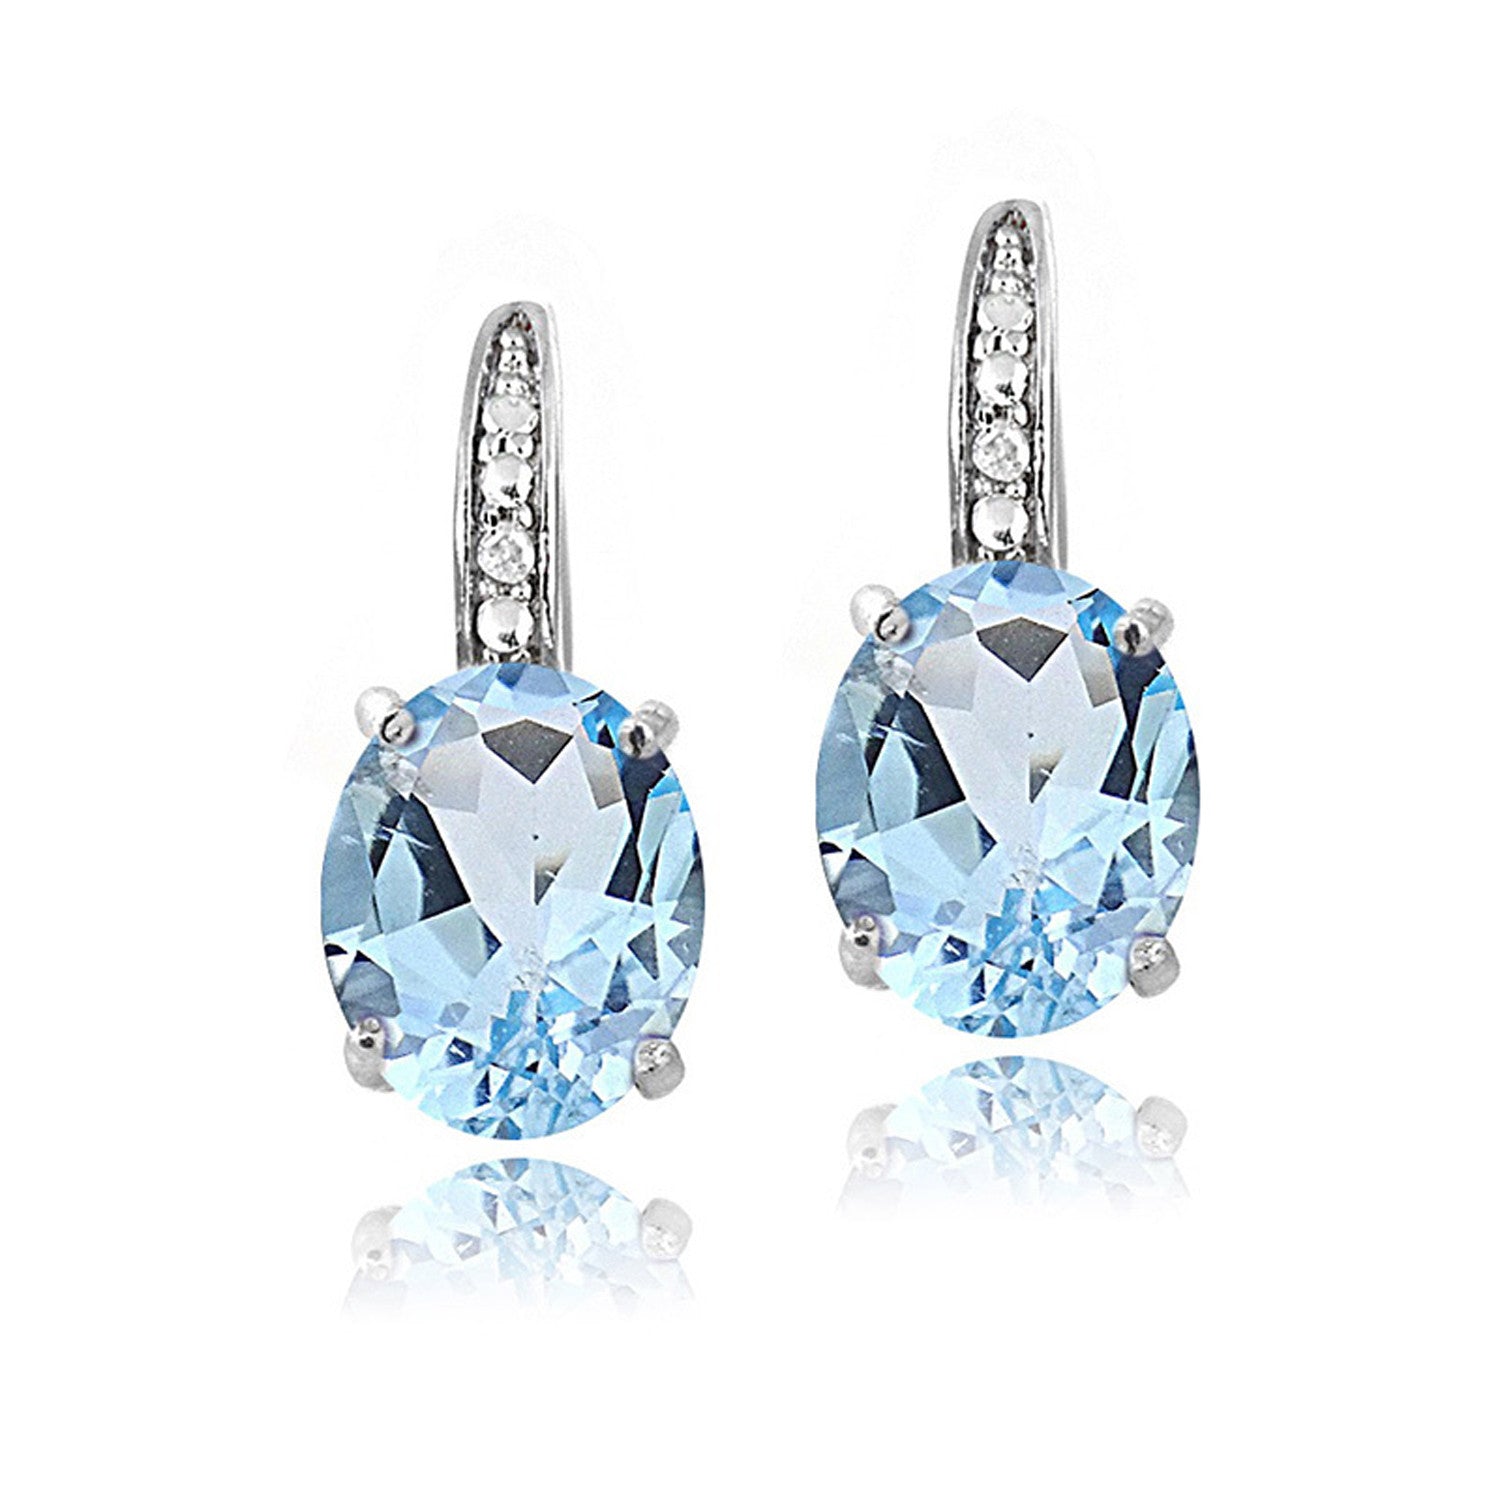 Sterling Silver Diamond & Gemstone Accent Leverback Earrings - Blue Topaz